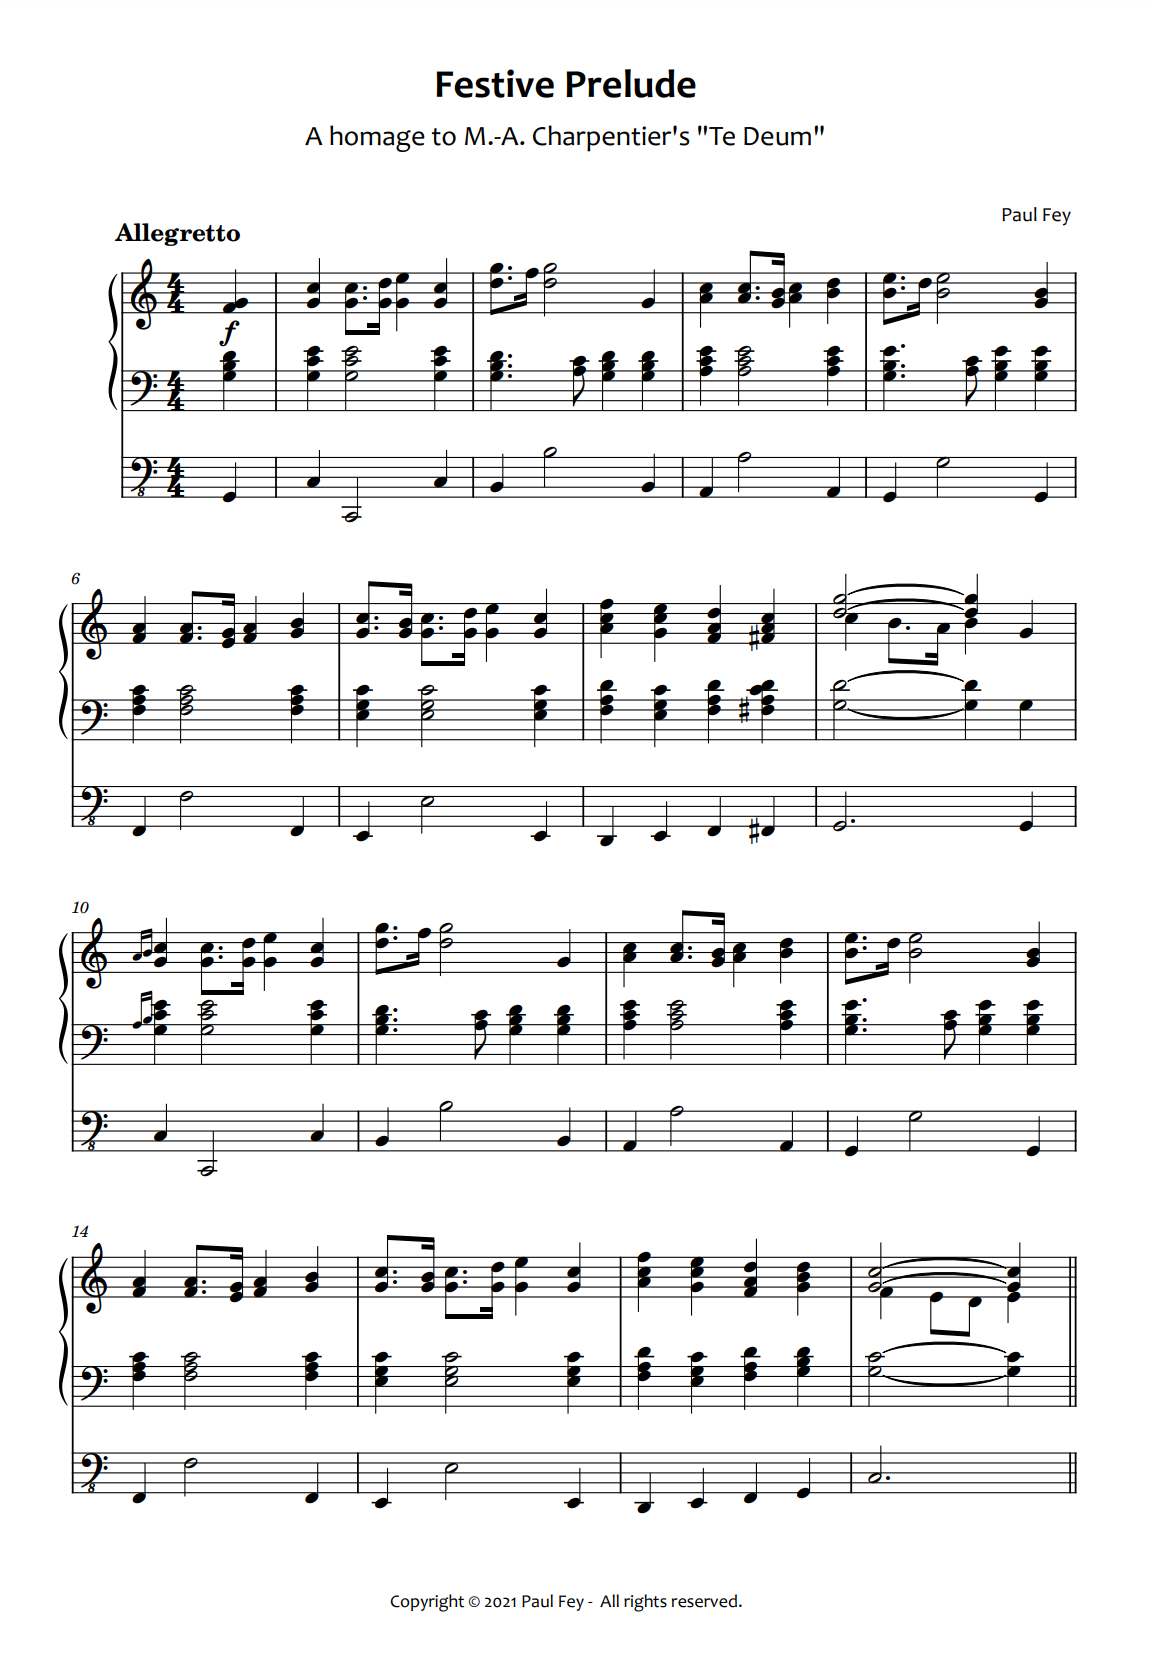 Festive Prelude in C-Major (Sheet Music) - Pipe Organ Music by Paul Fey